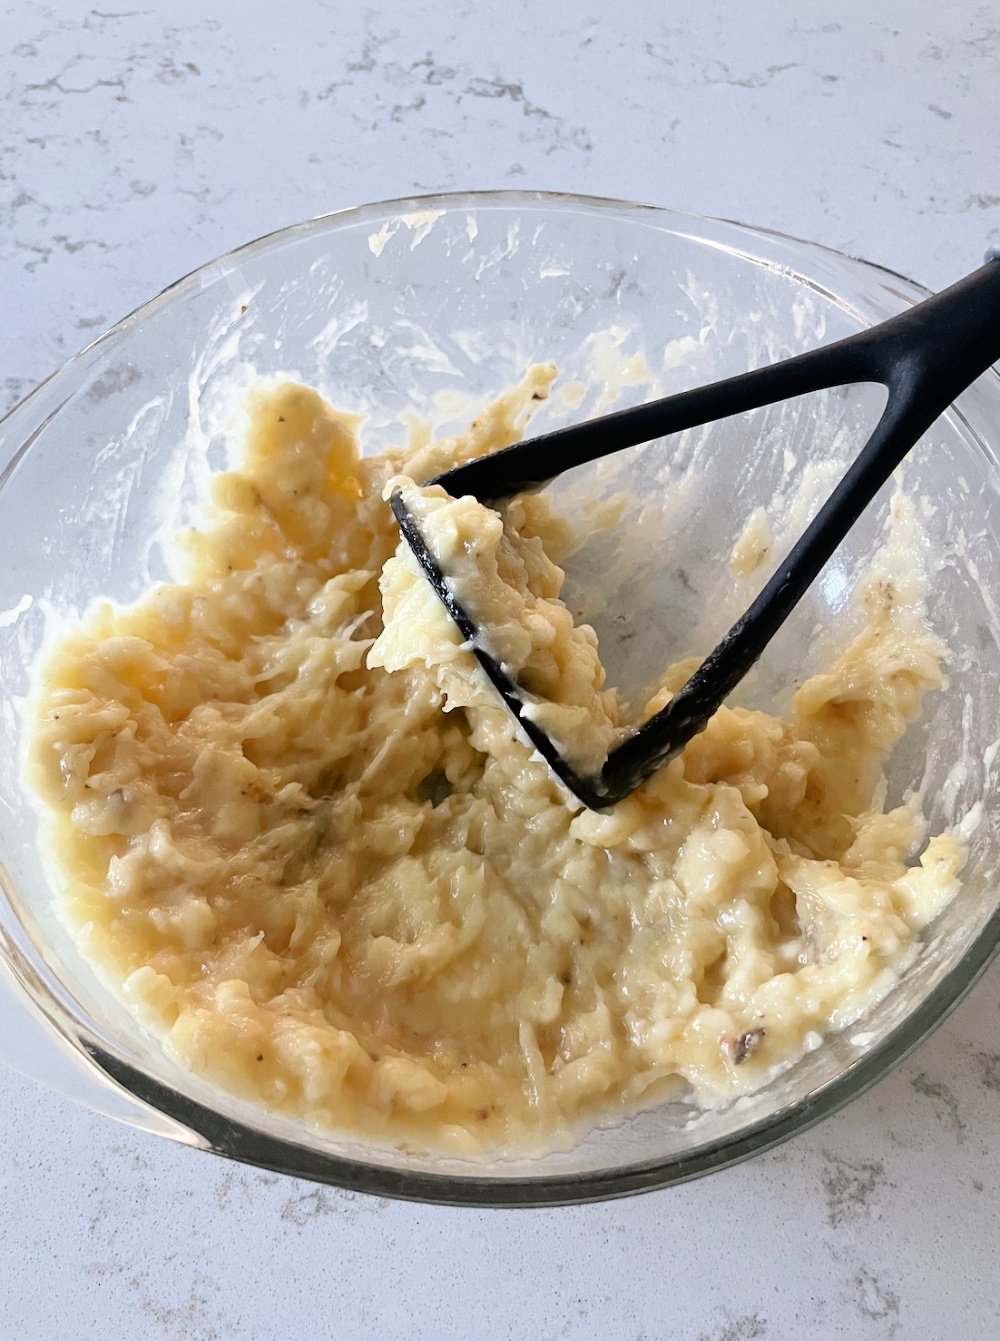 Mashed bananas in a mixing bowl